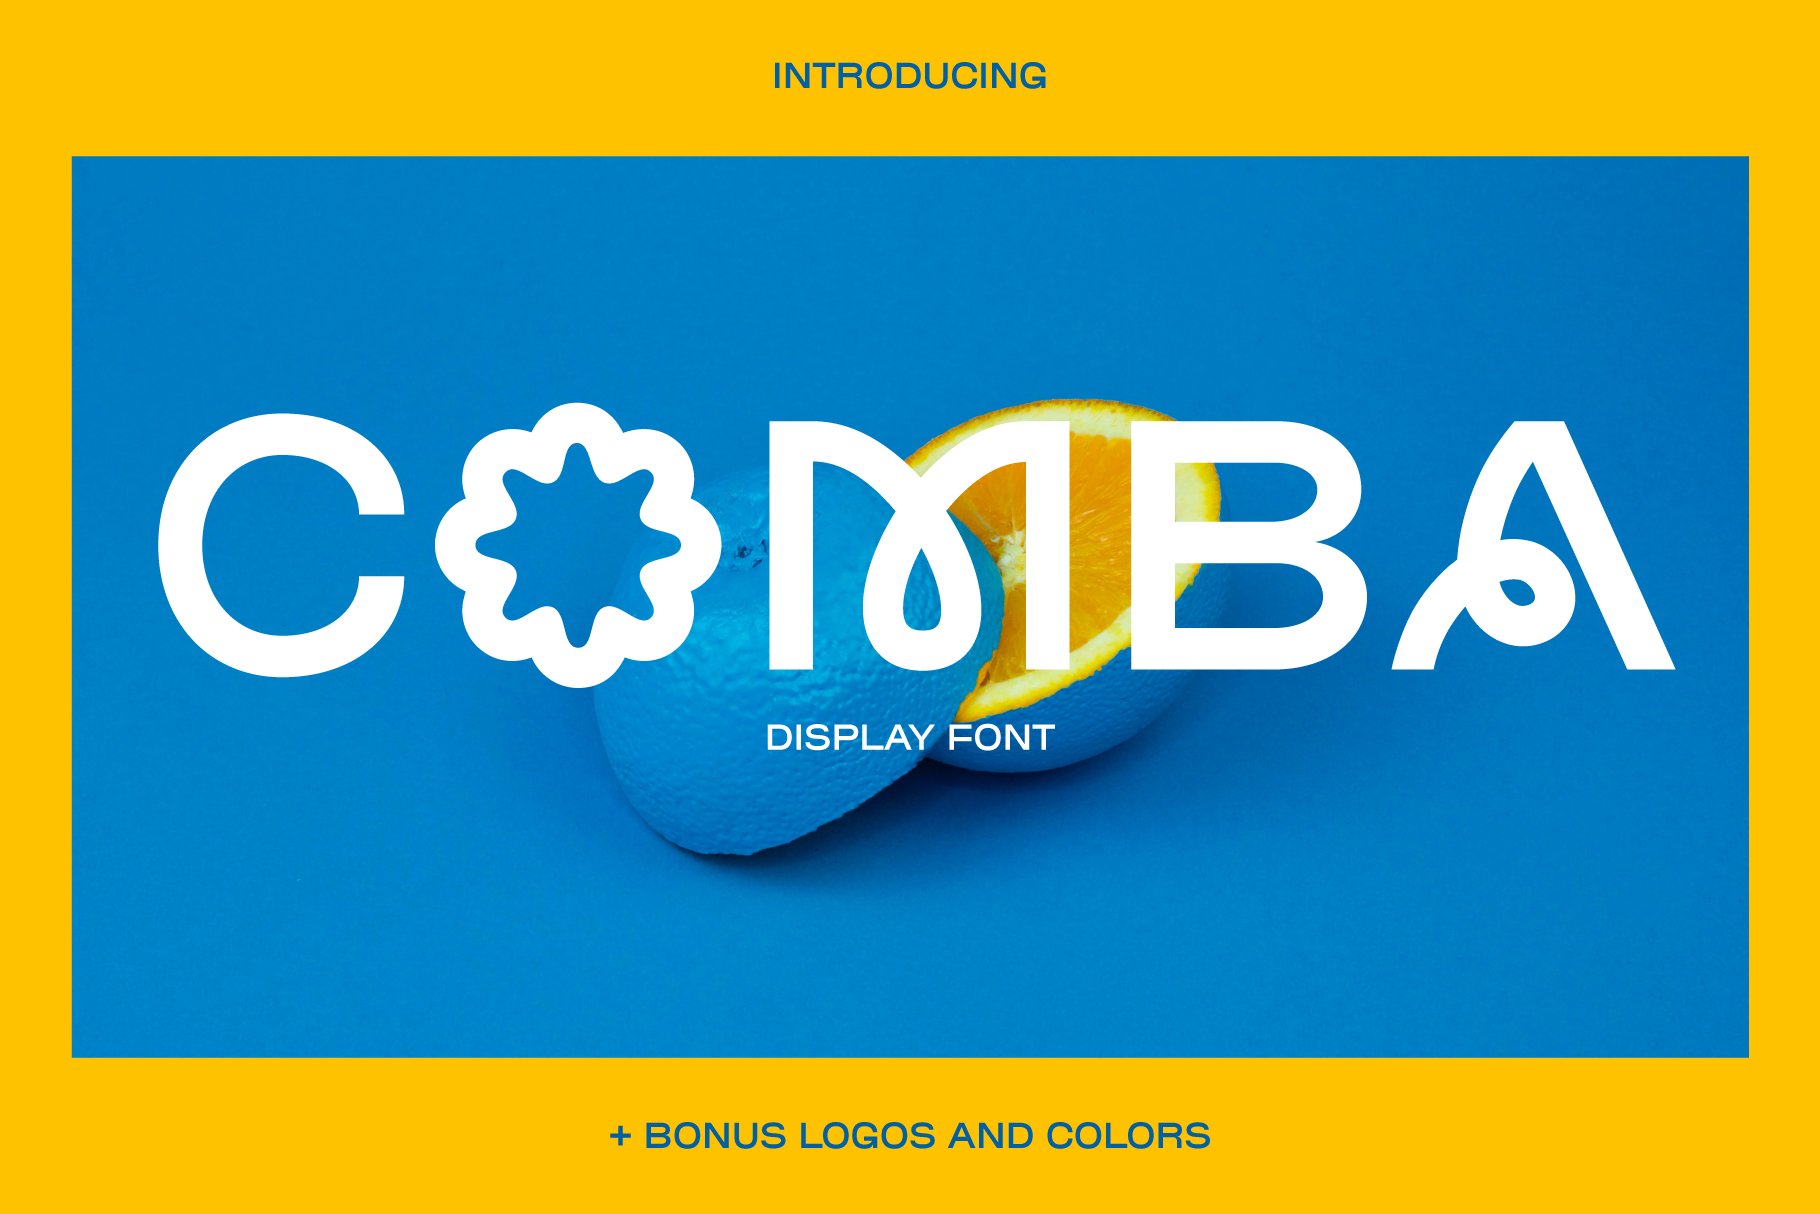 Comba Display Font + Logos cover image.